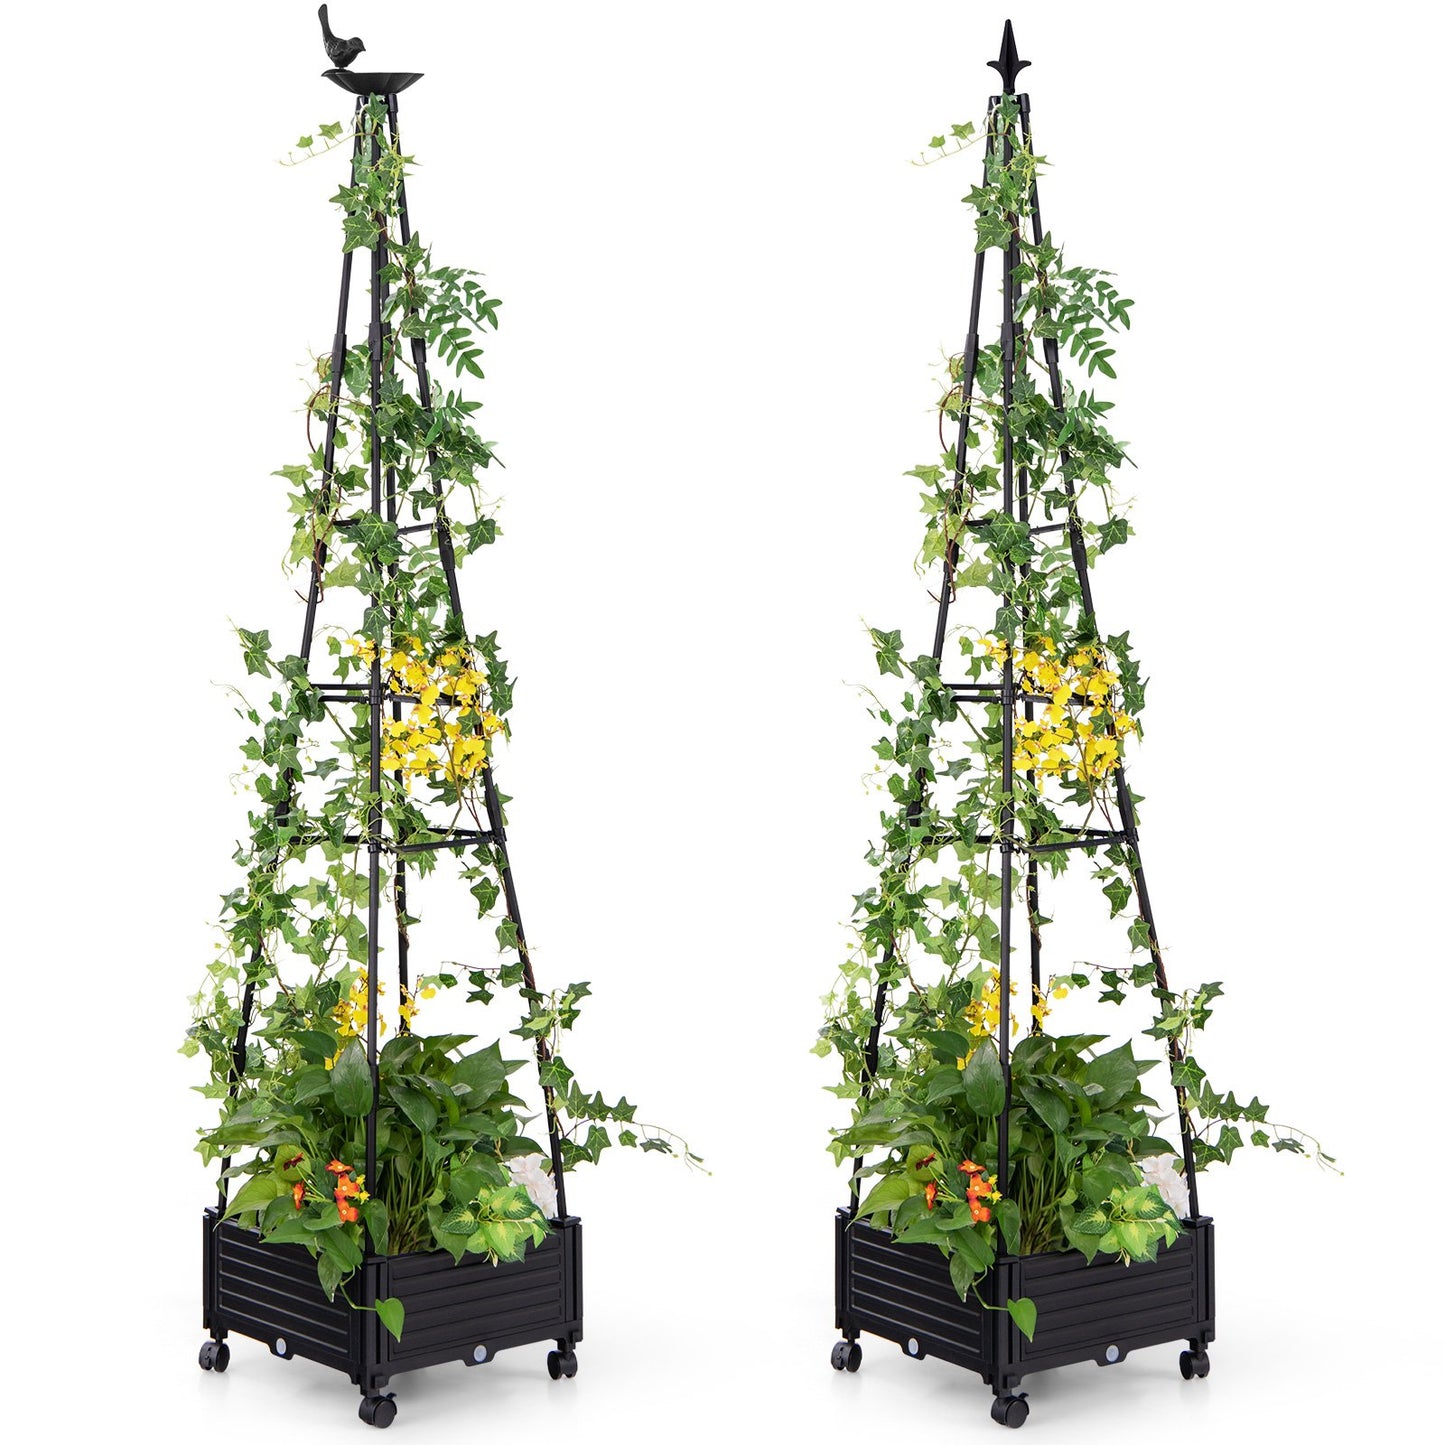 Garden Obelisk Trellis with Self-Drainage System for Climbing Plants, Black